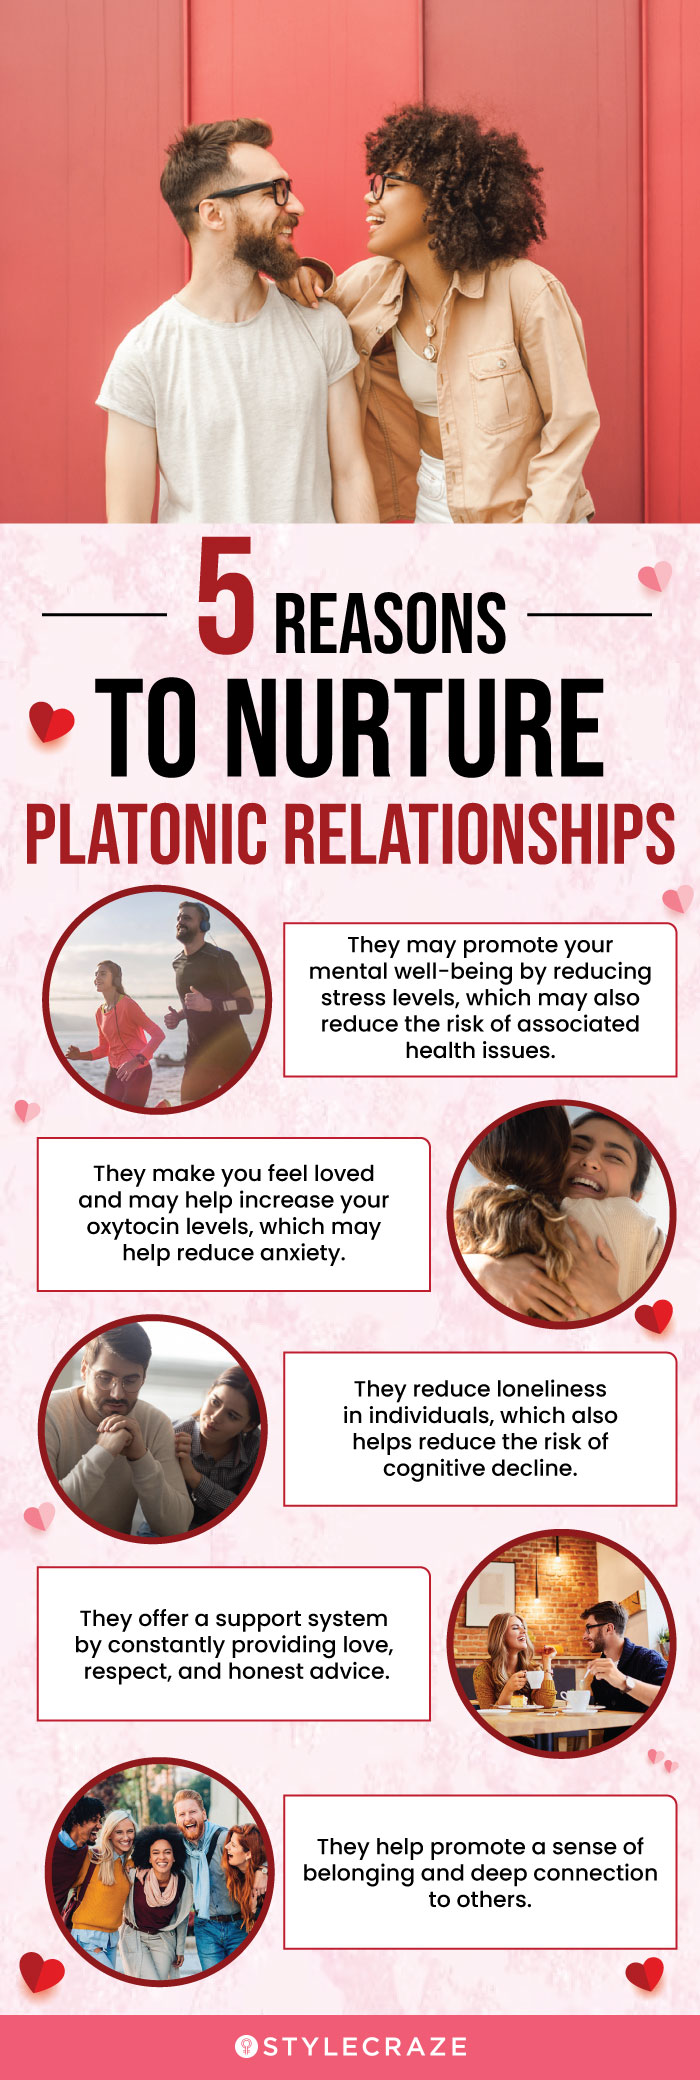 5 reasons to nurture platonic relationships (infographic)